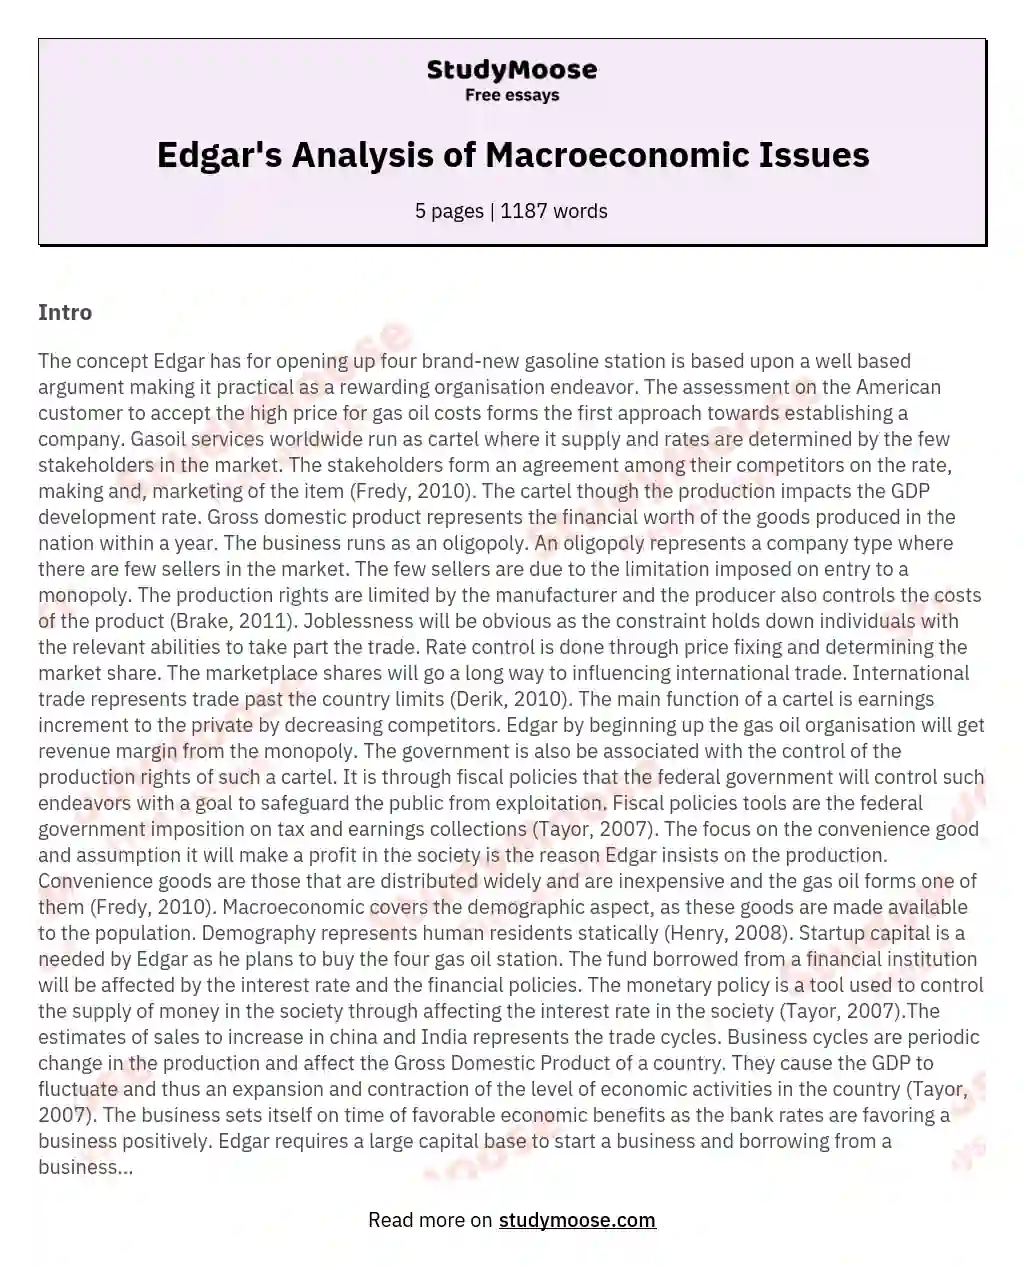 Edgar's Analysis of Macroeconomic Issues